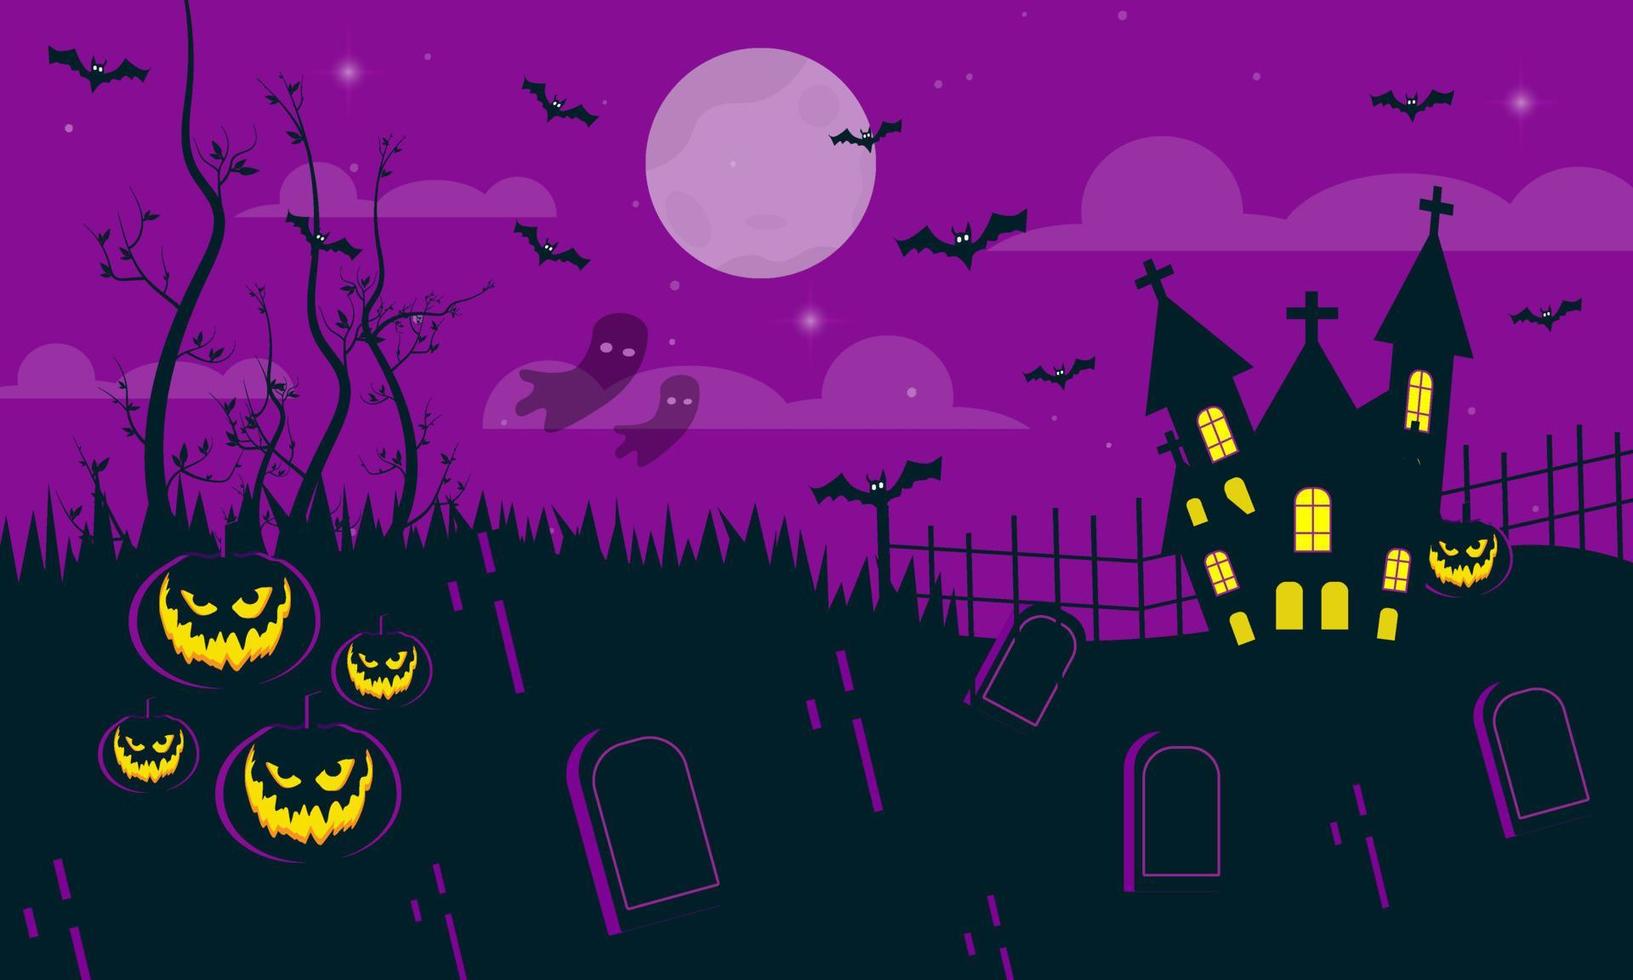 vector illustration of Halloween night background  bats  pumpkins and dark castle.